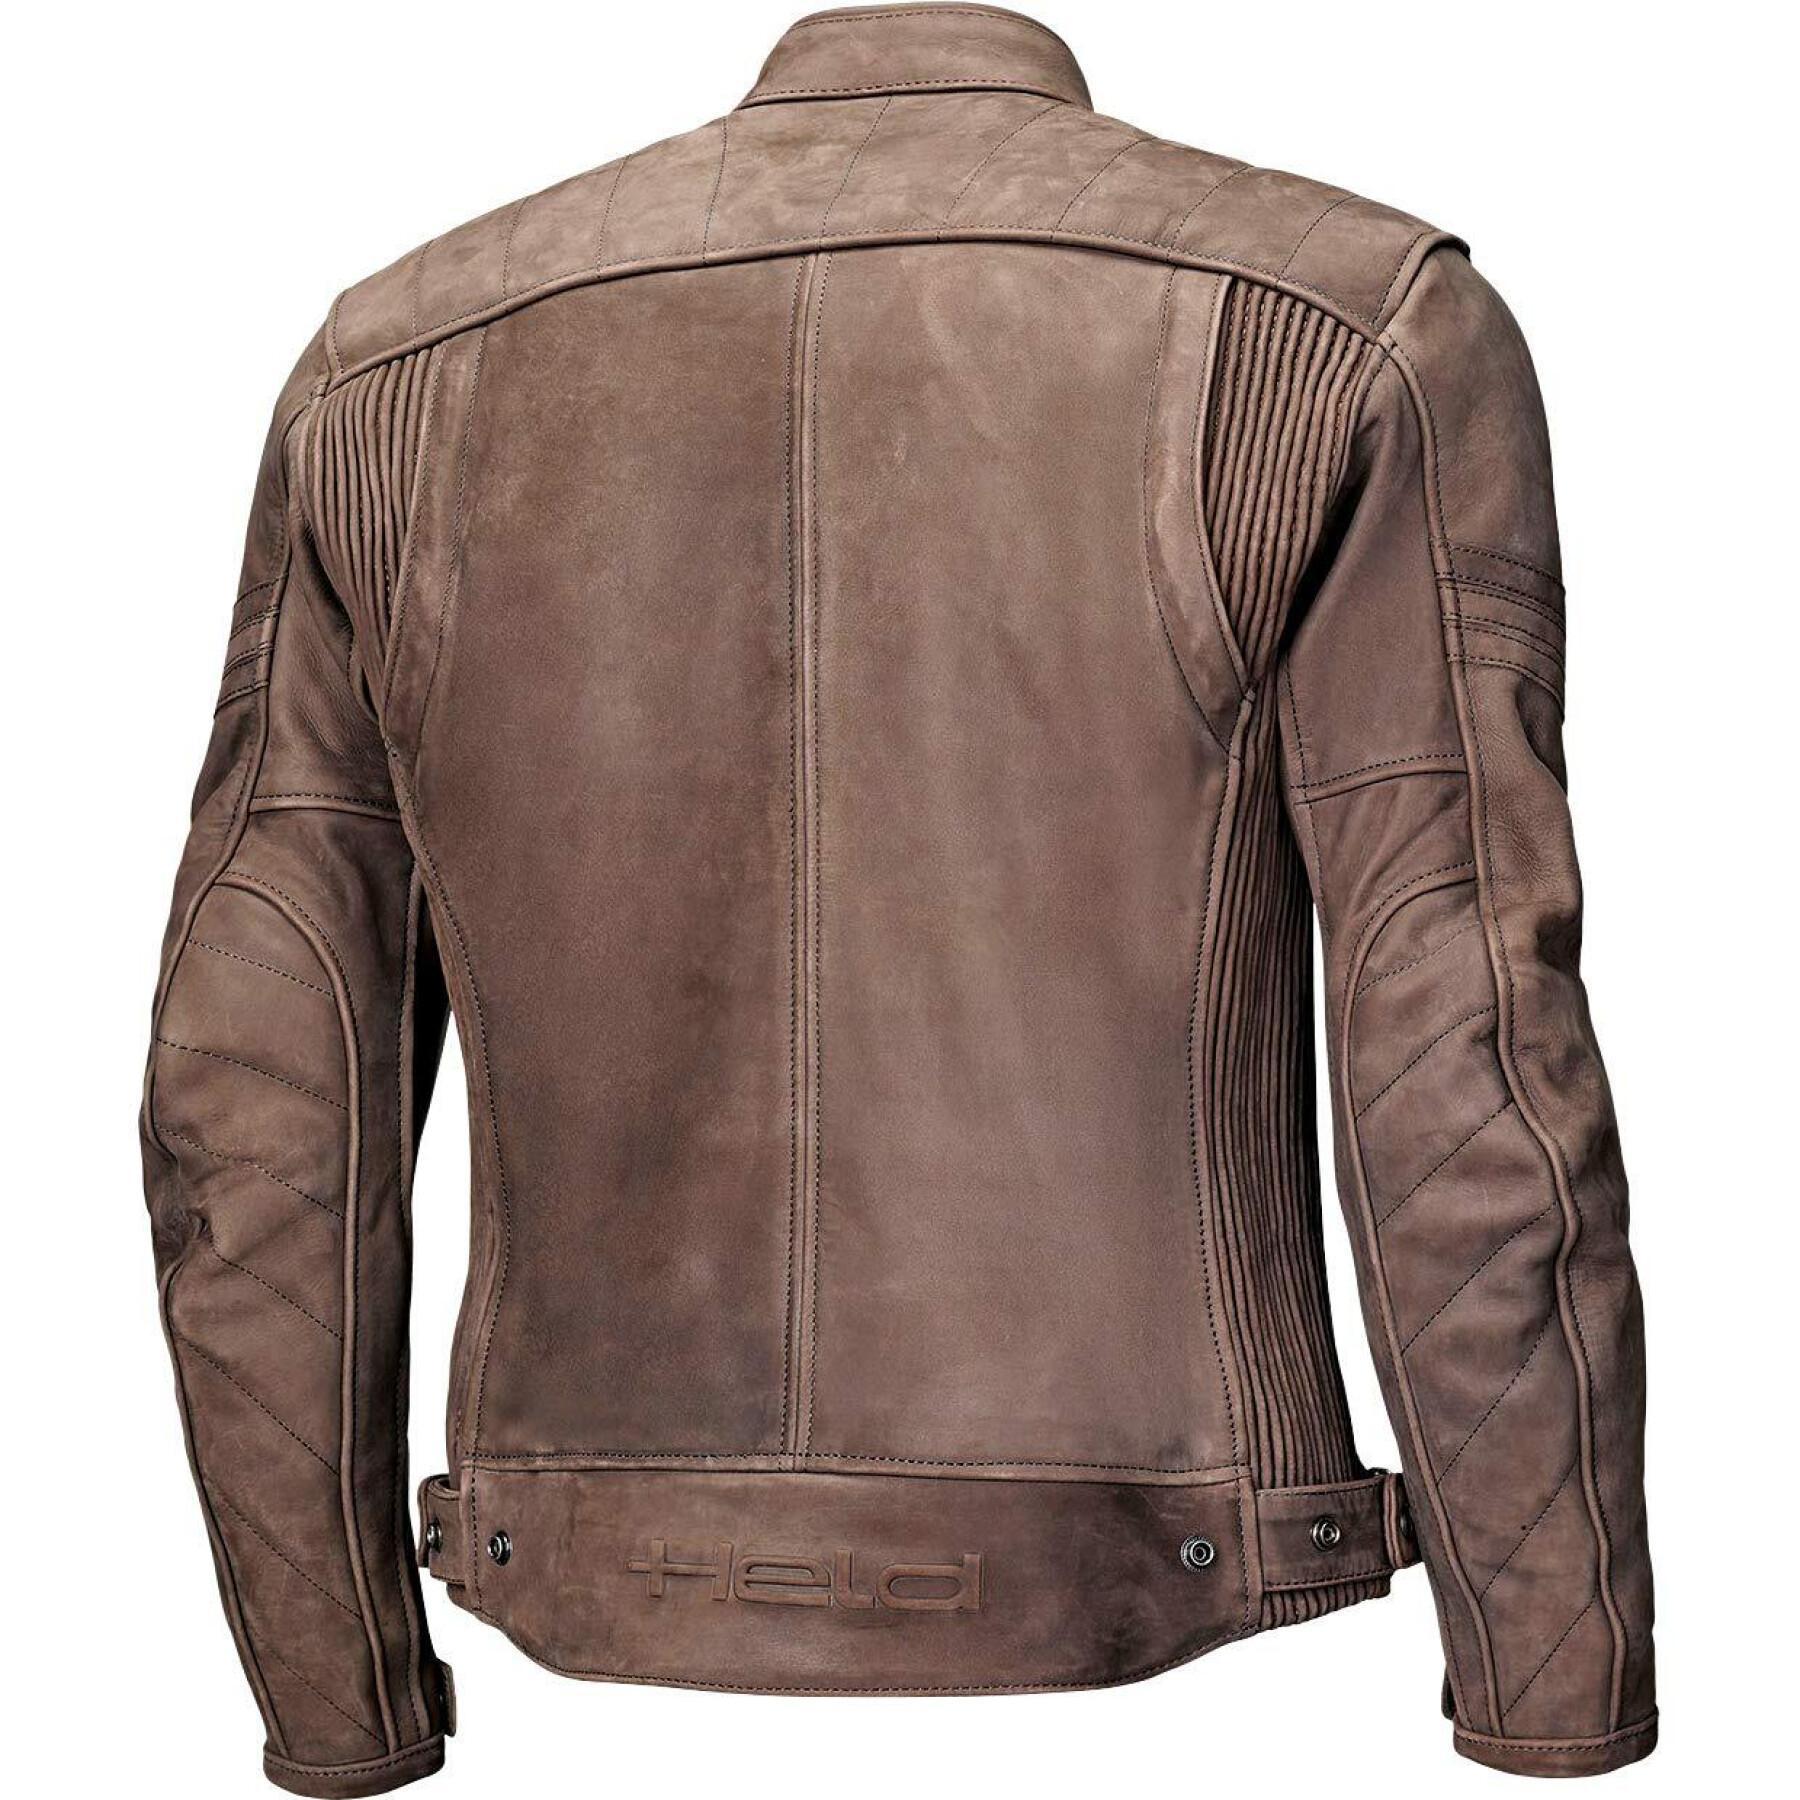 Motorcycle leather jacket Held hot rock